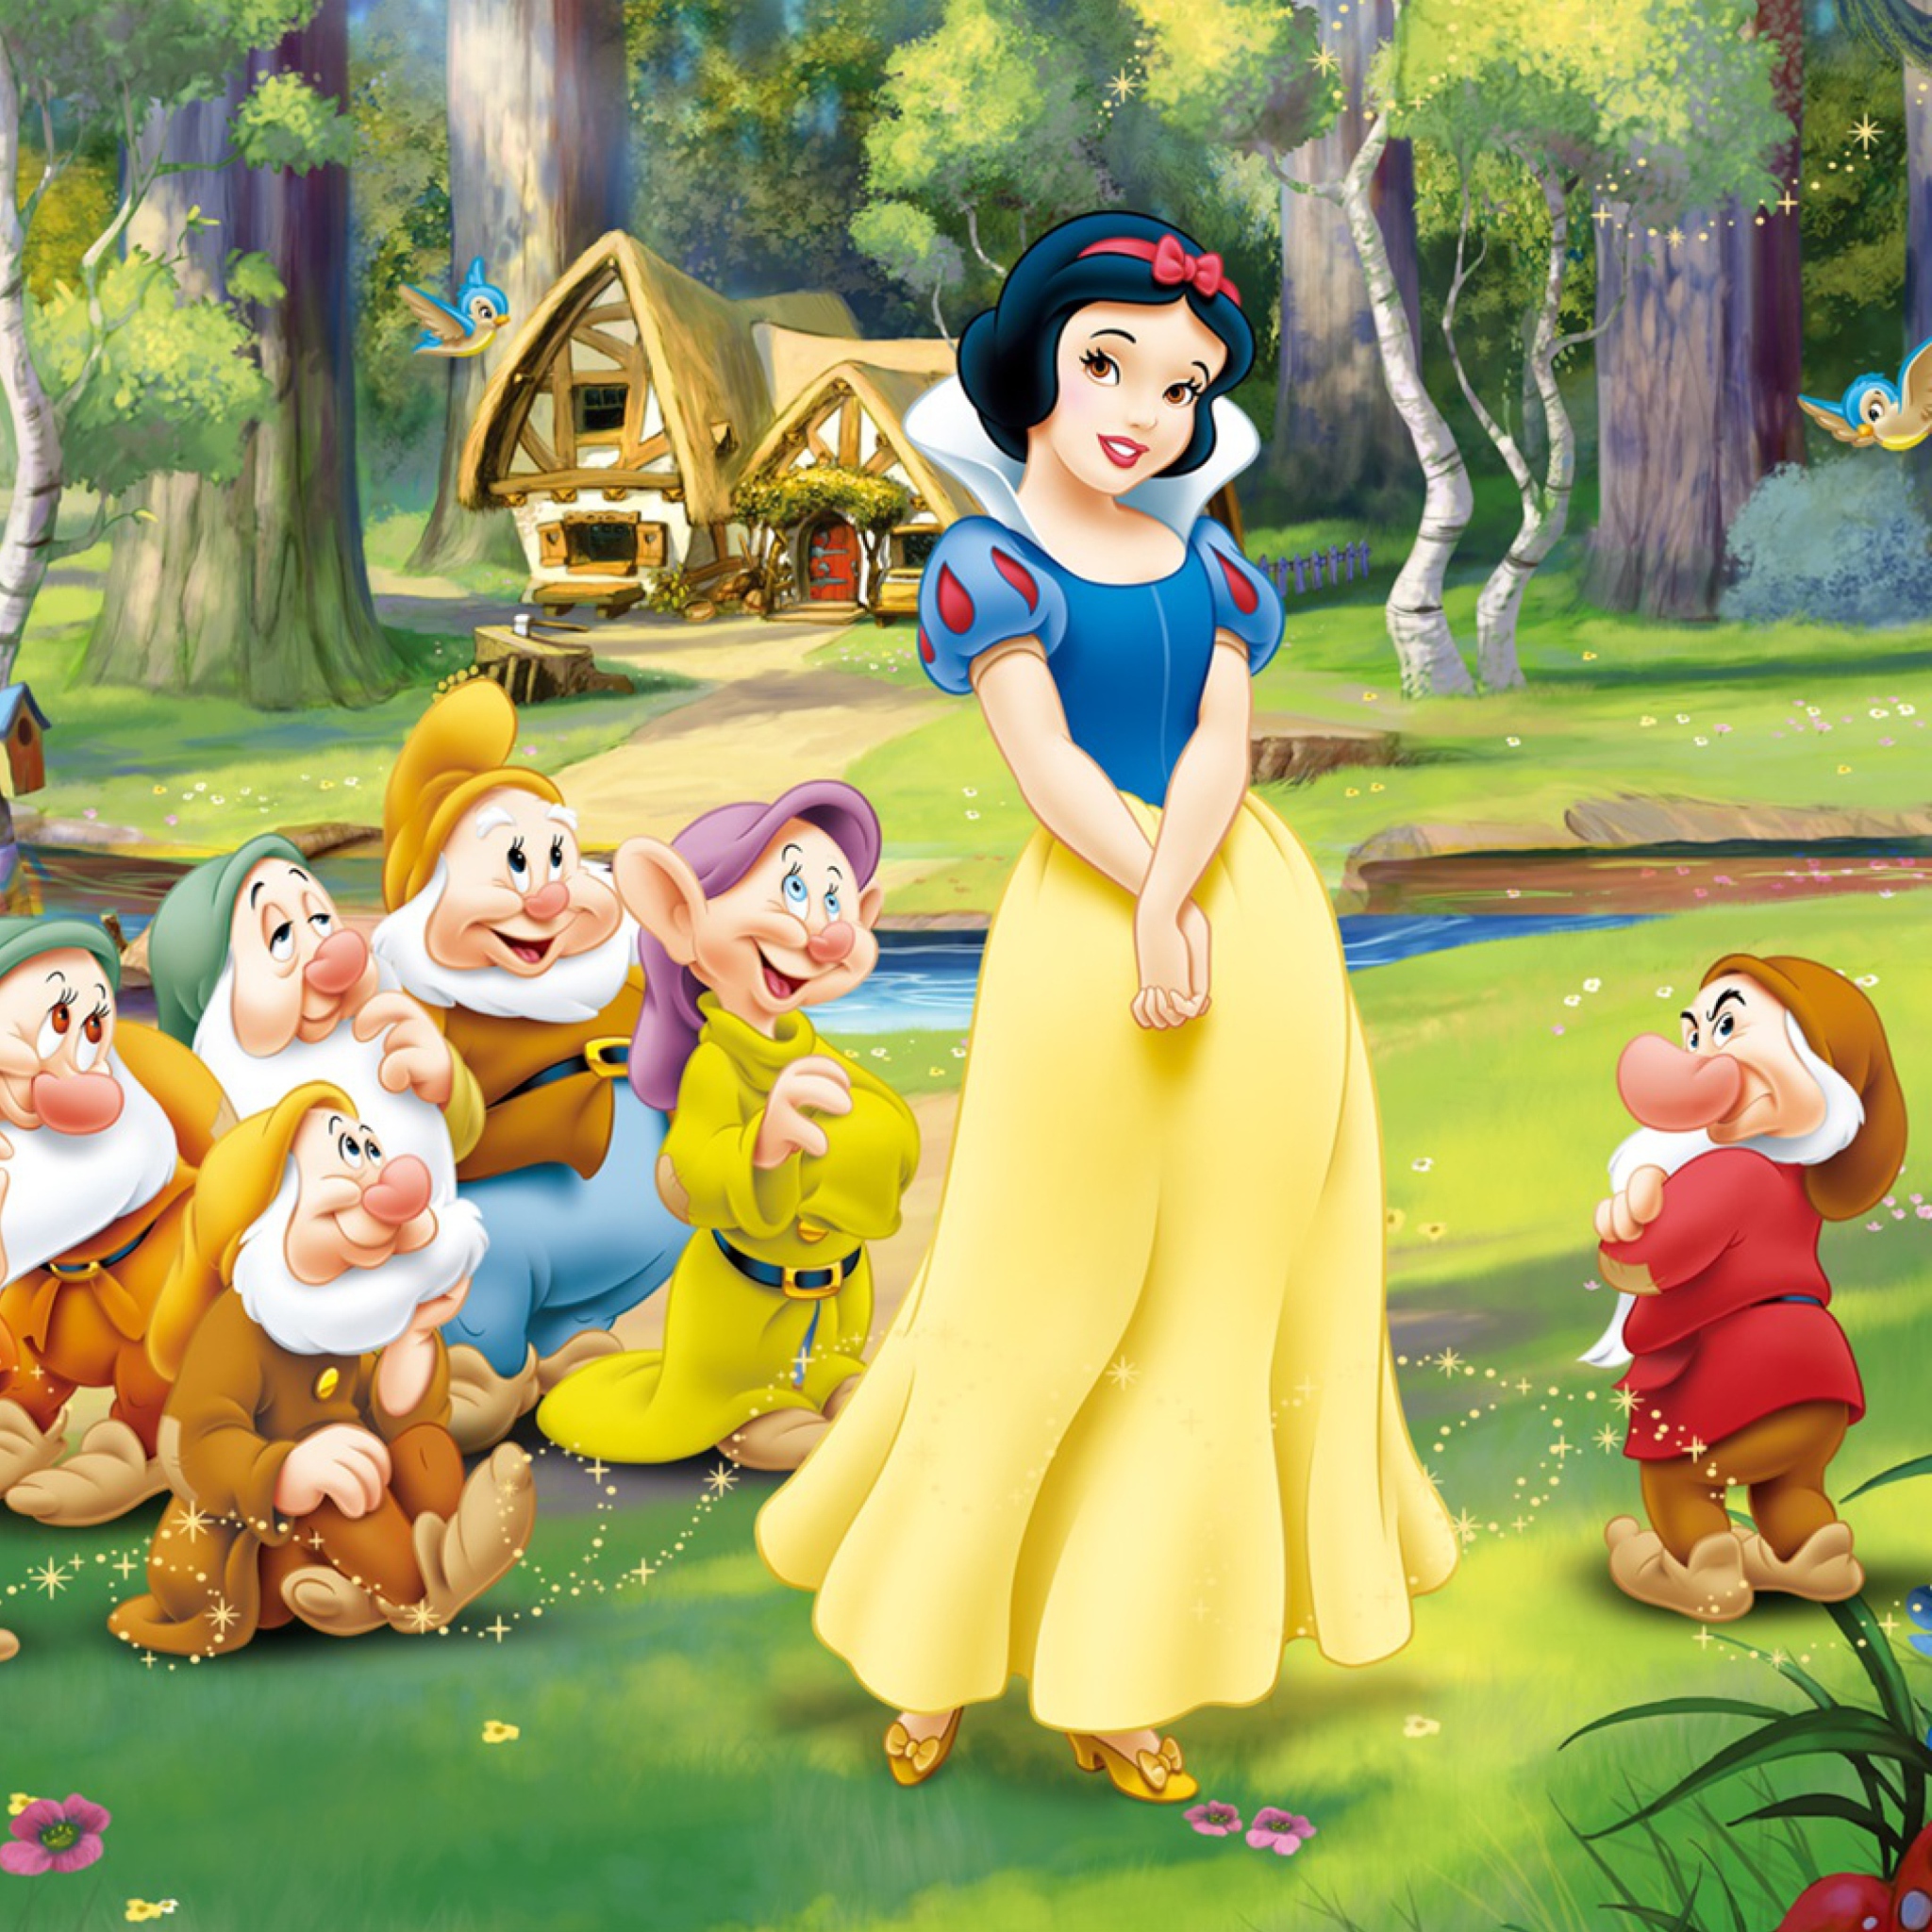 Snow White and the Seven Dwarfs wallpaper 2048x2048